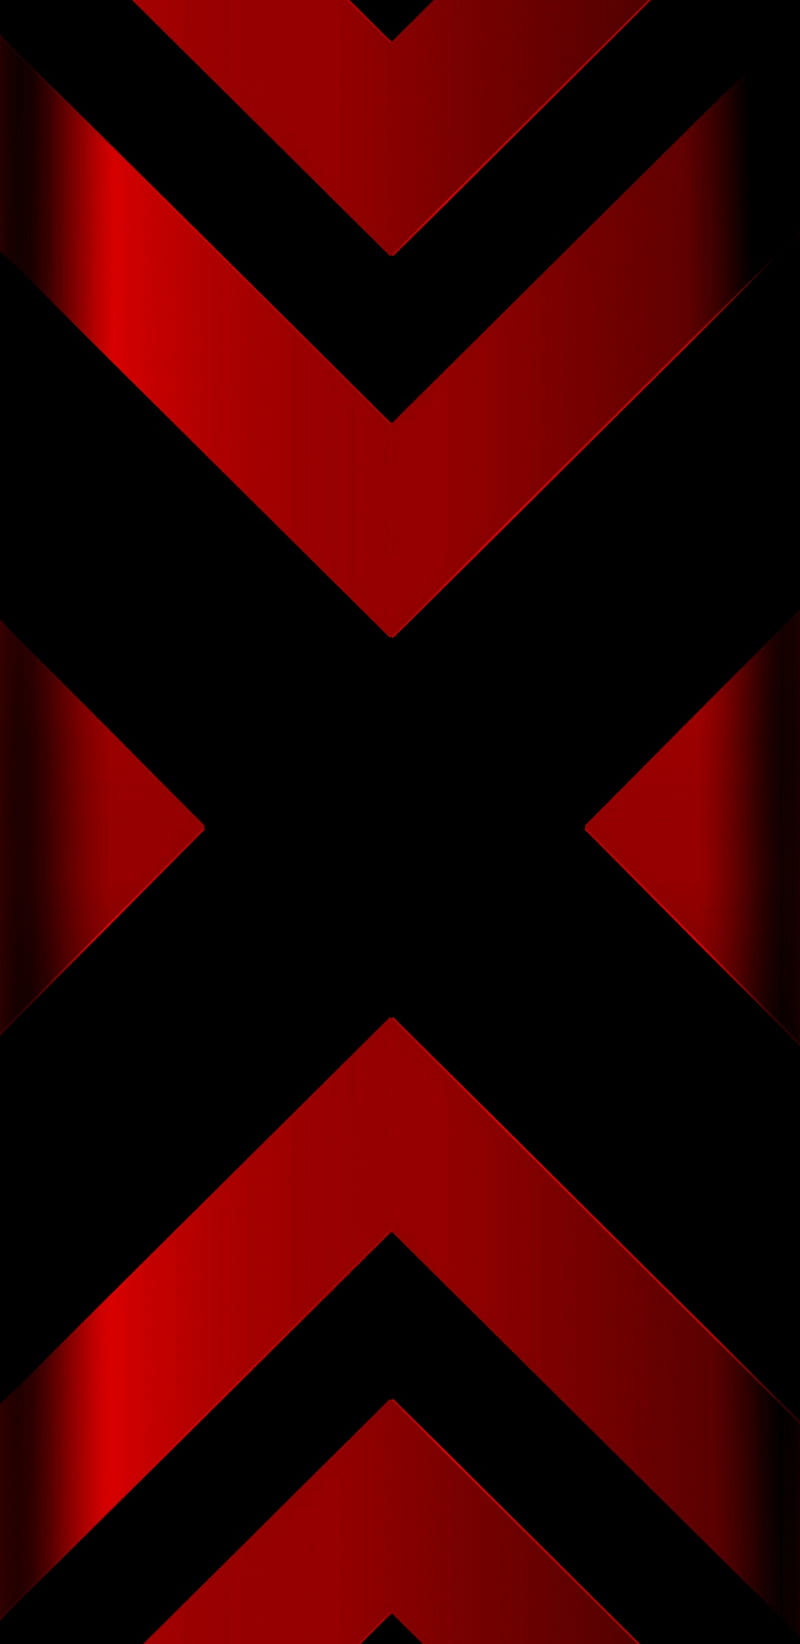 red x wallpaper